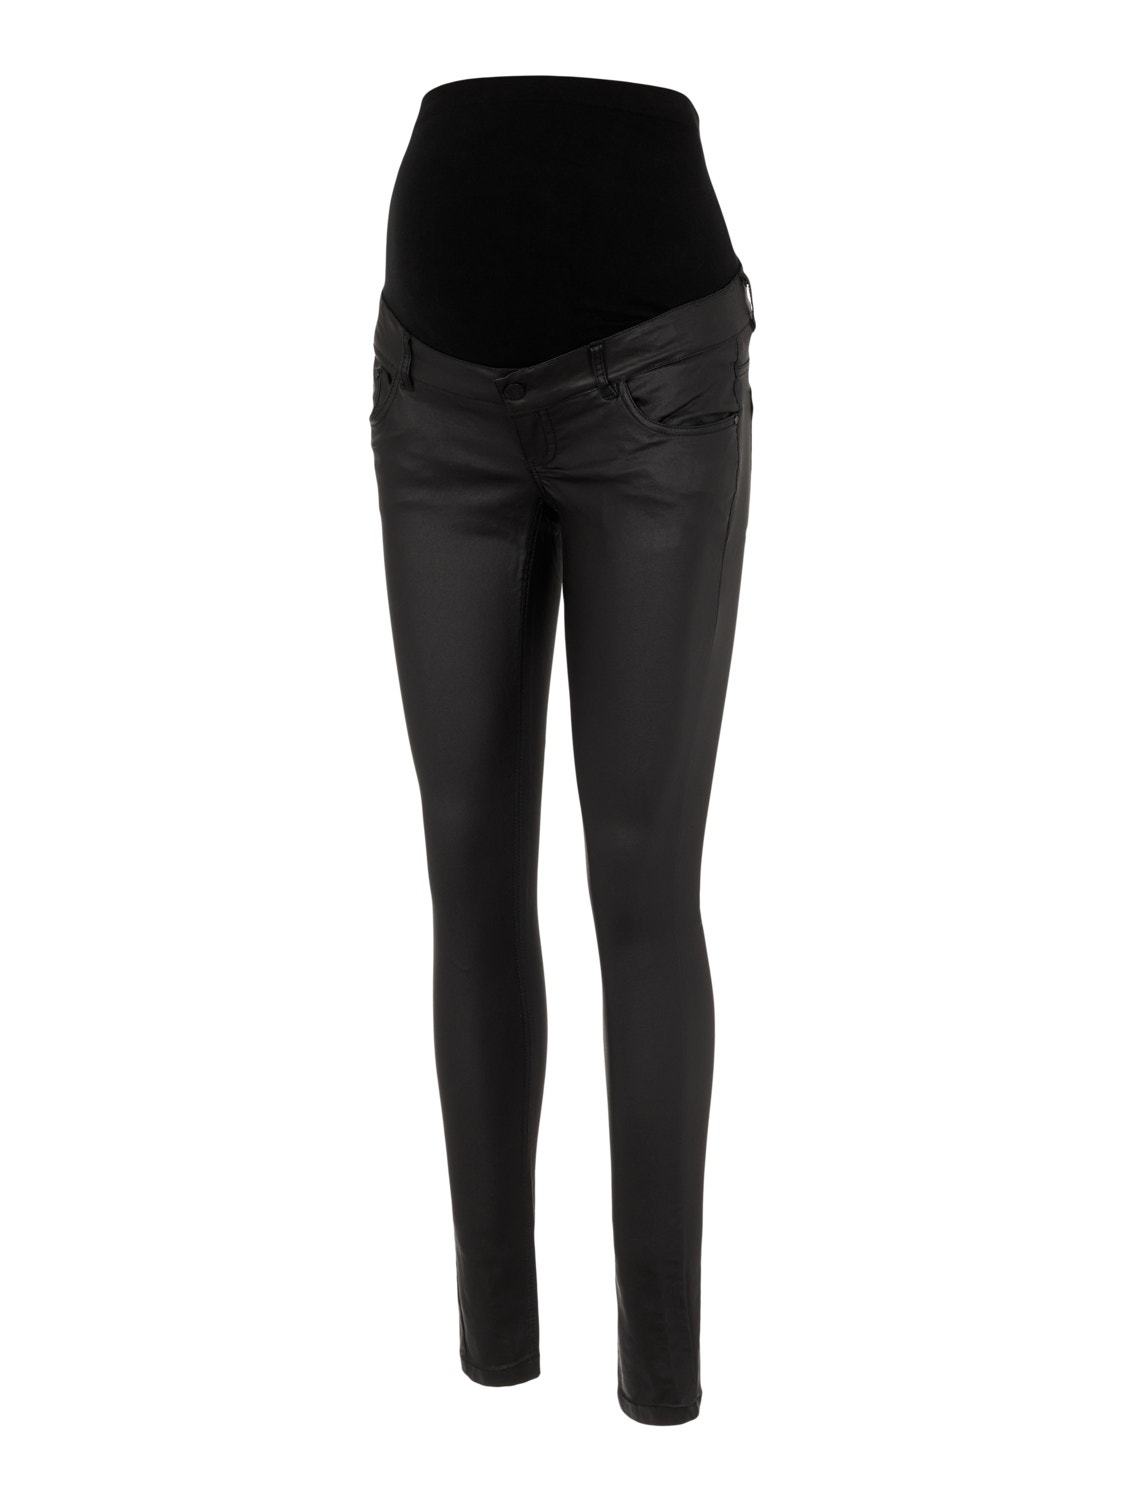 MAMA.LICIOUS Jeans Slim Fit -Black Denim - 20017194